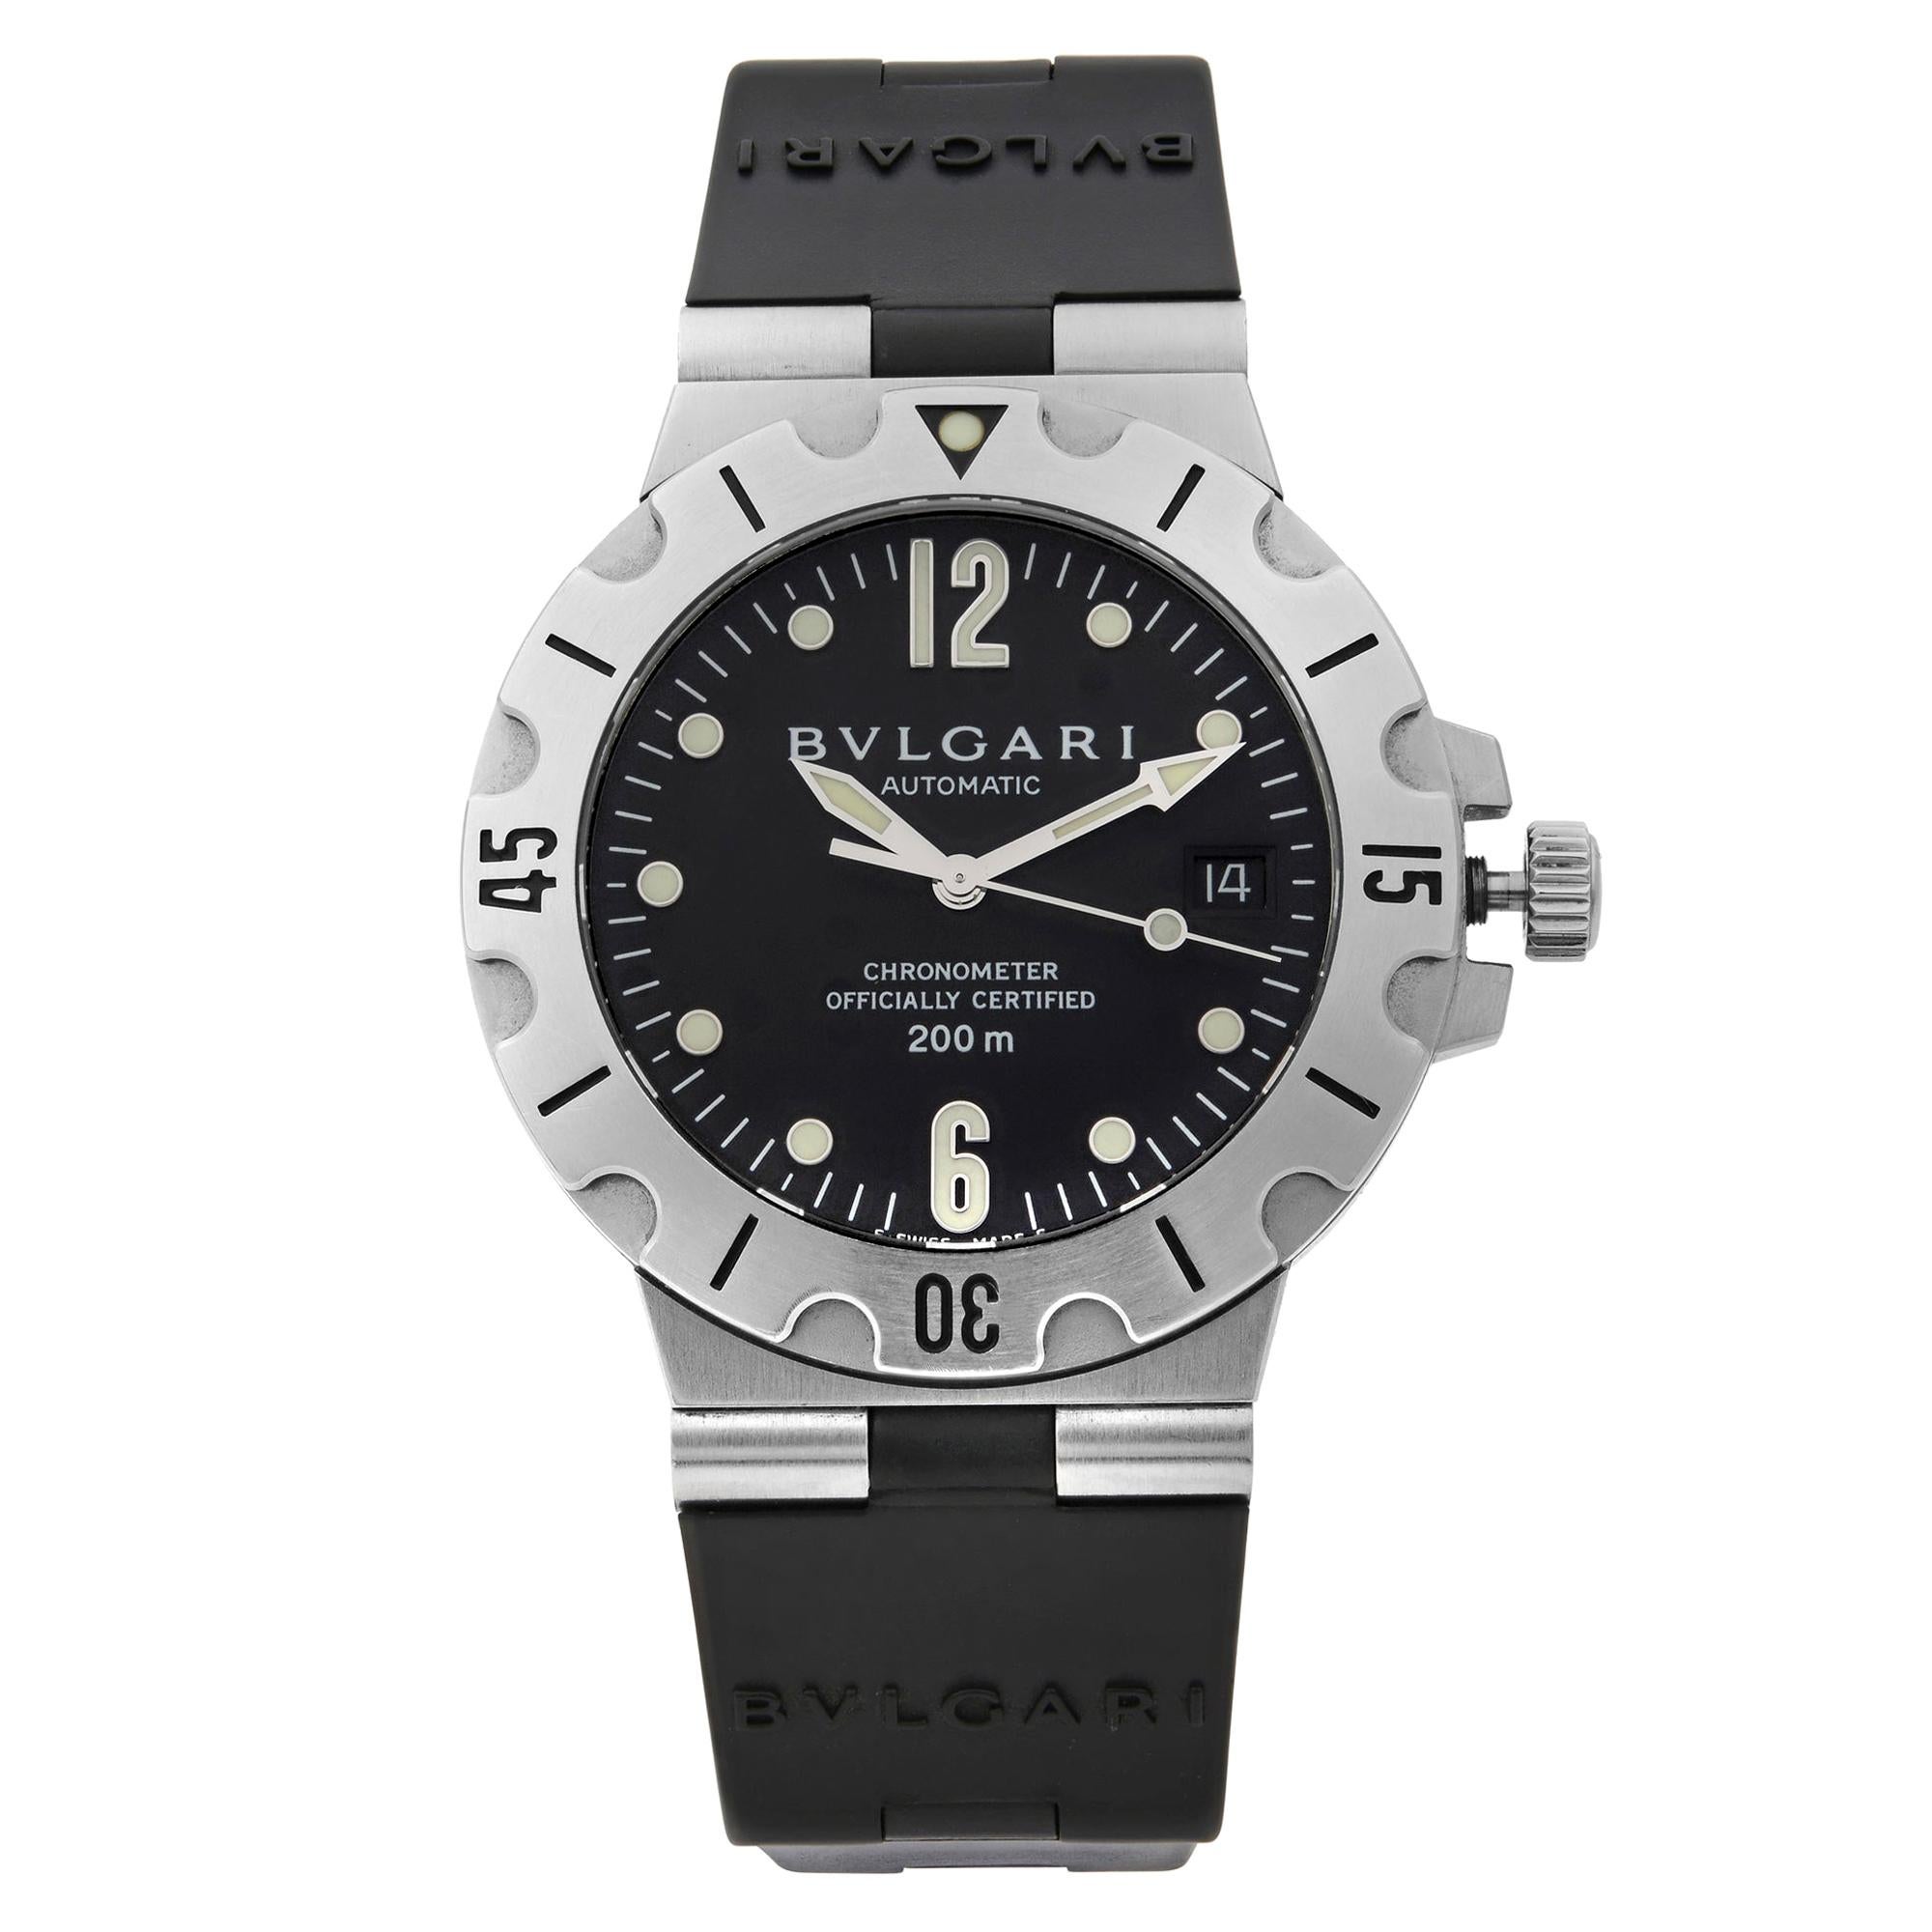 Bvlgari Diagono Scuba Stainless Steel Black Dial Automatic Men's Watch SD 38 S